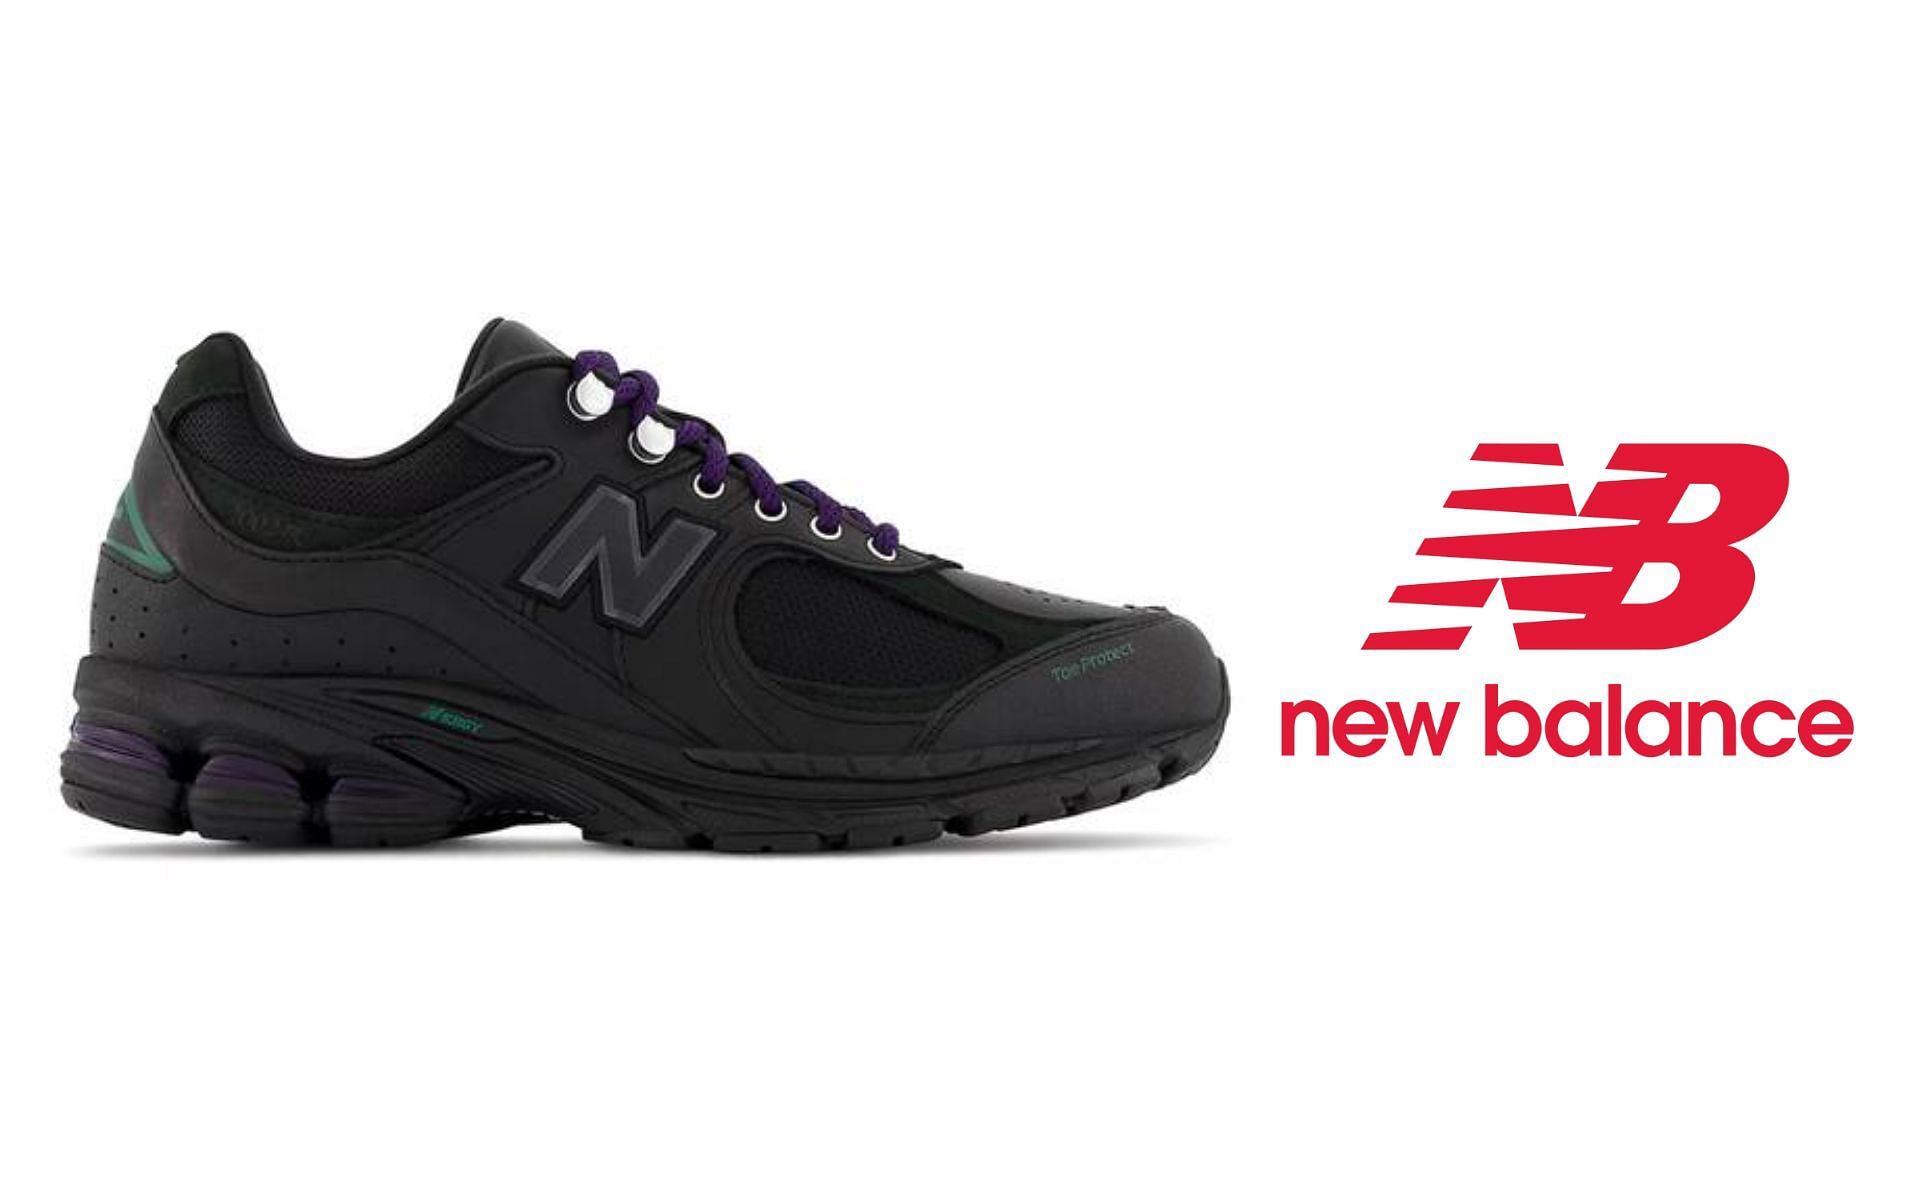 New Balance 2002R Black colorway (Image via NB)